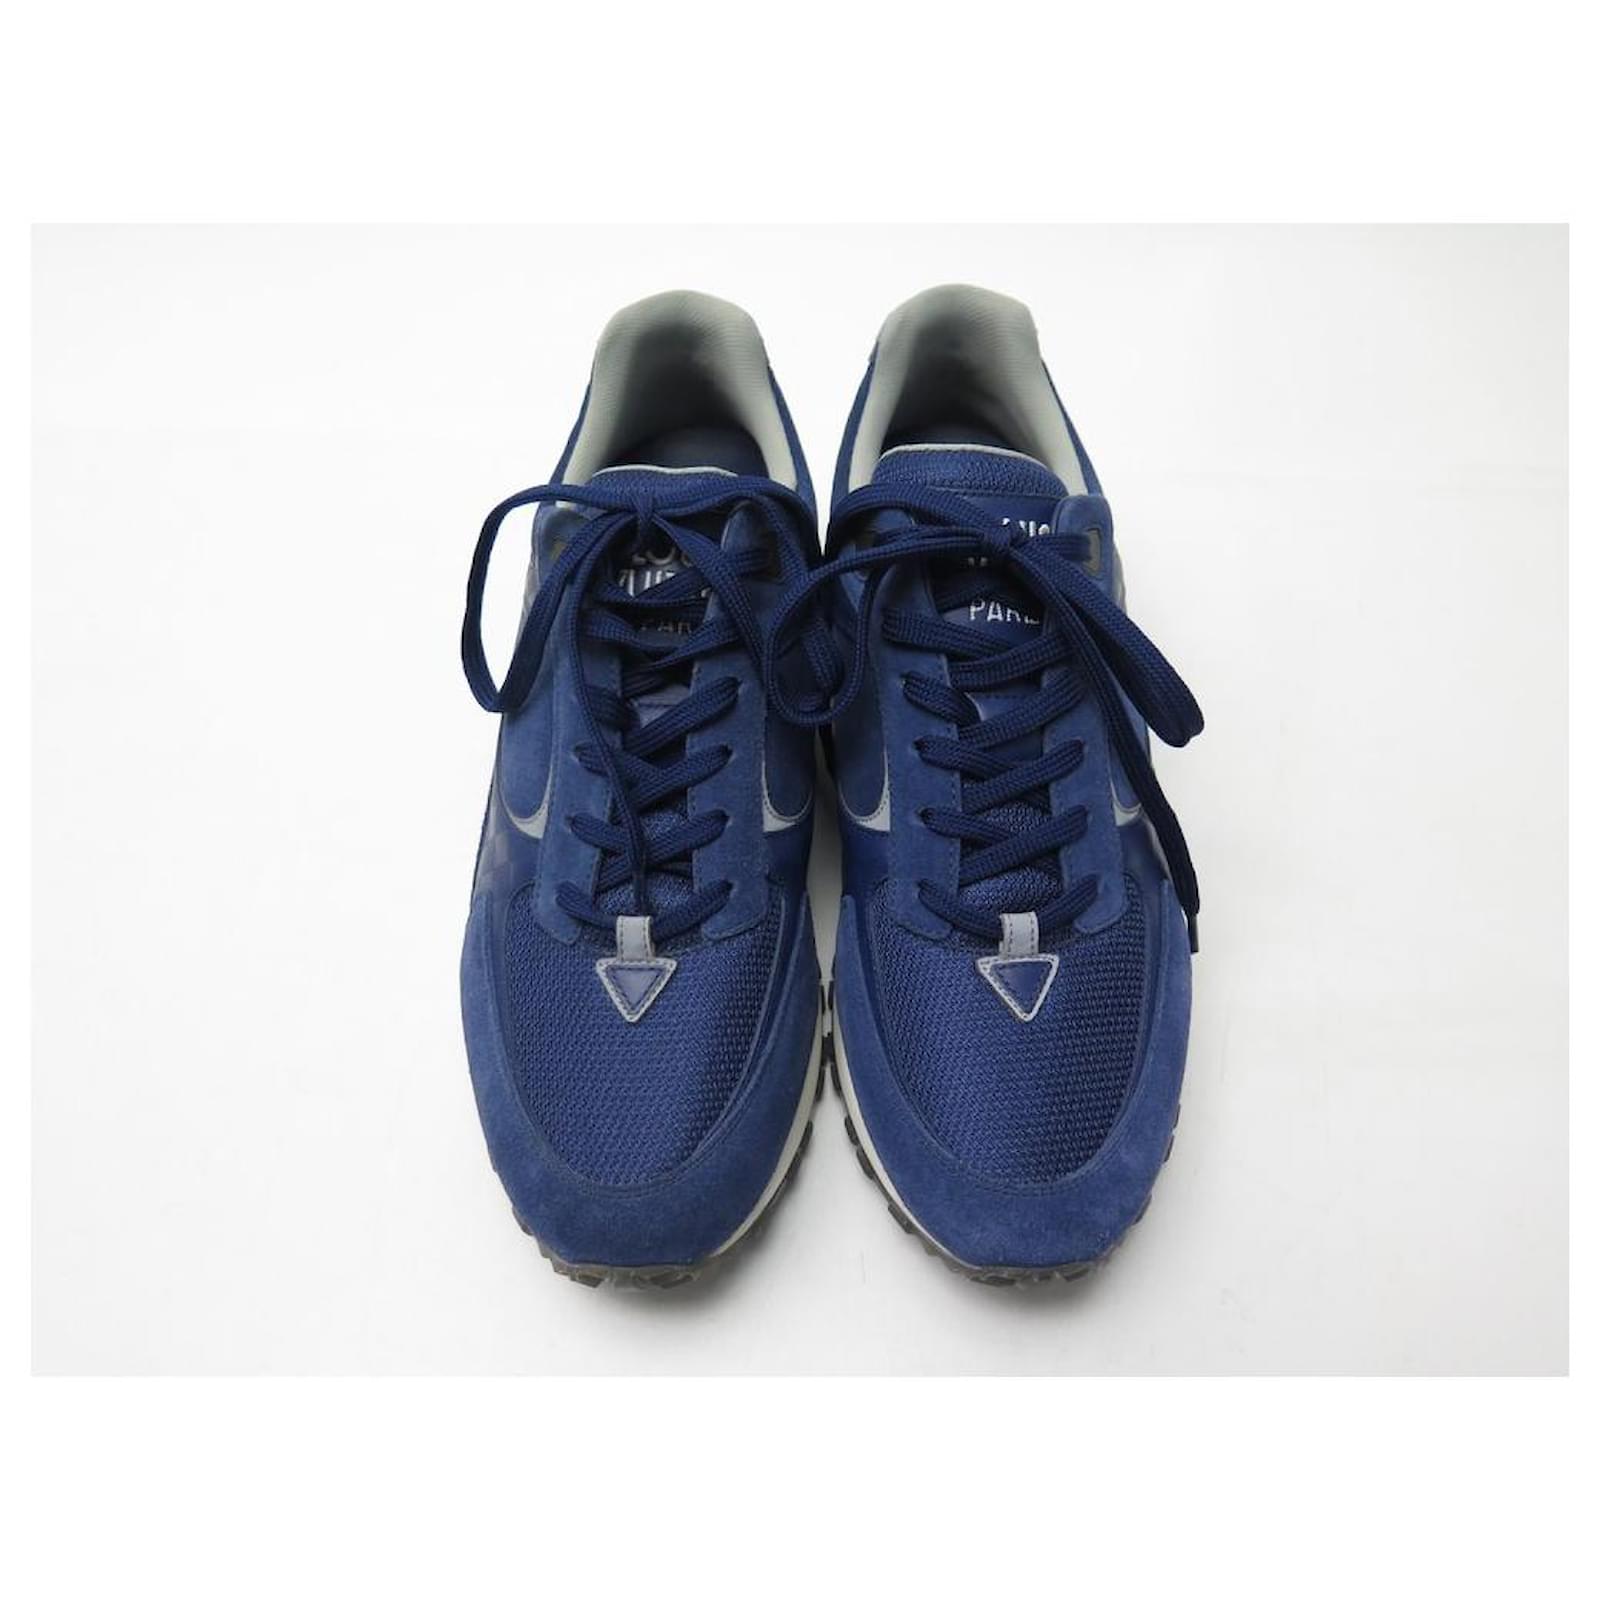 LOUIS VUITTON sneakers SHOES 7.5 41.5 NAVY BLUE CANVAS SNEAKERS